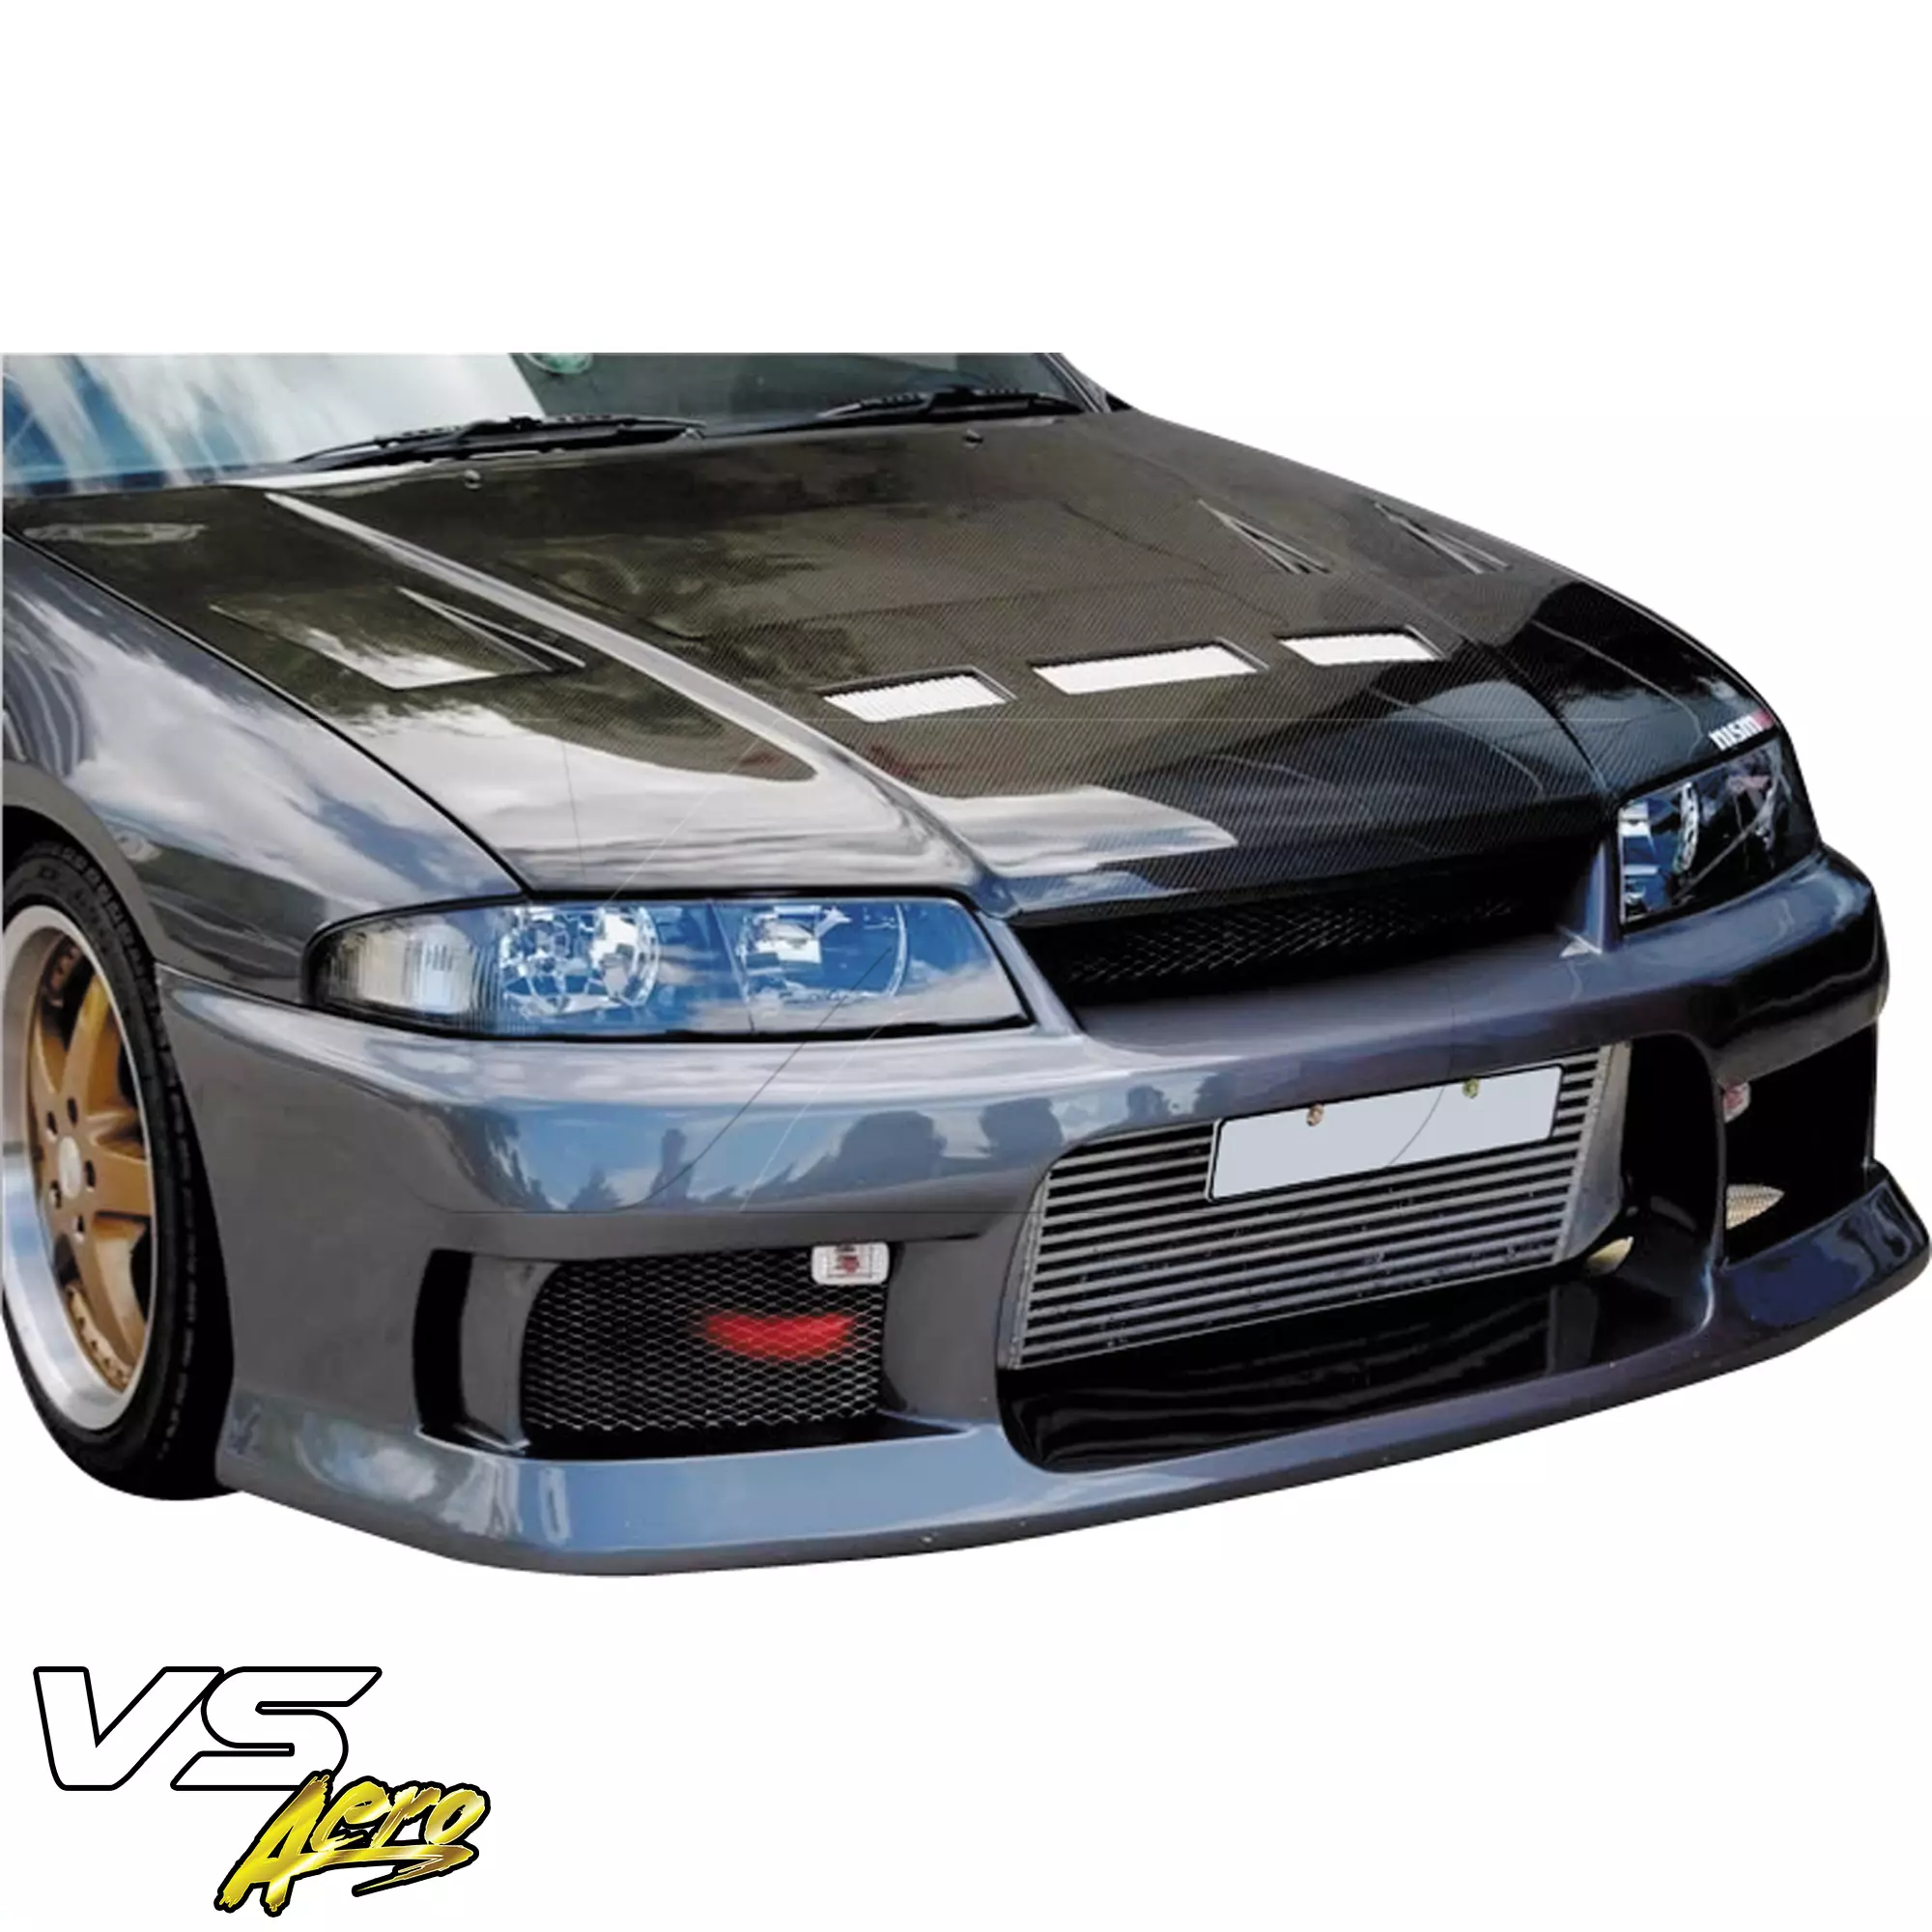 VSaero FRP MSPO v2 Body Kit 4pc > Nissan Skyline R33 GTS 1995-1998 > 2dr Coupe - Image 5